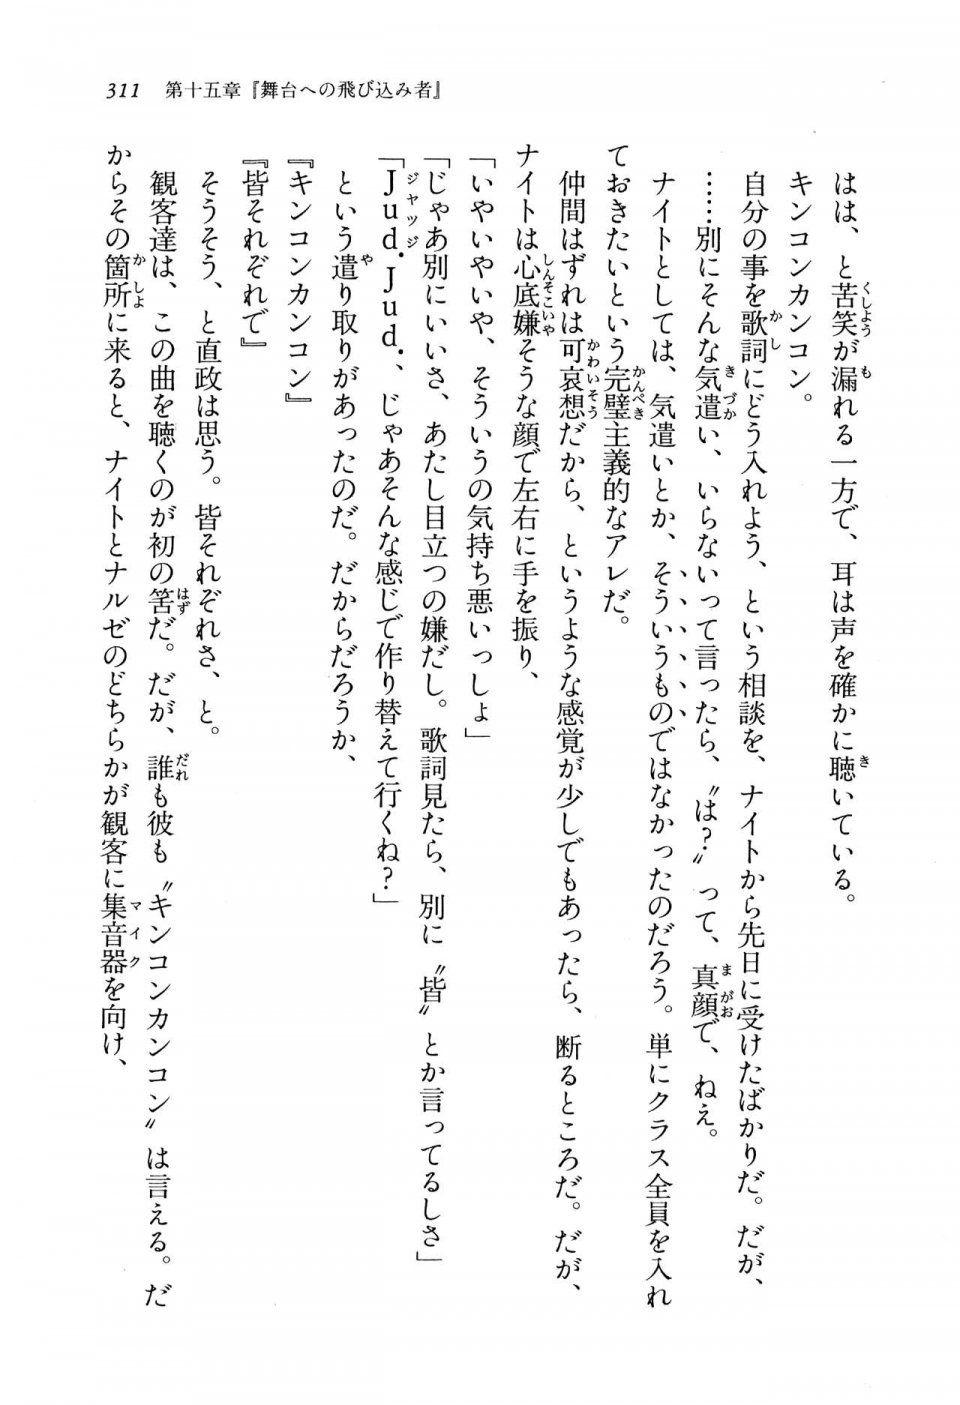 Kyoukai Senjou no Horizon BD Special Mininovel Vol 8(4B) - Photo #315